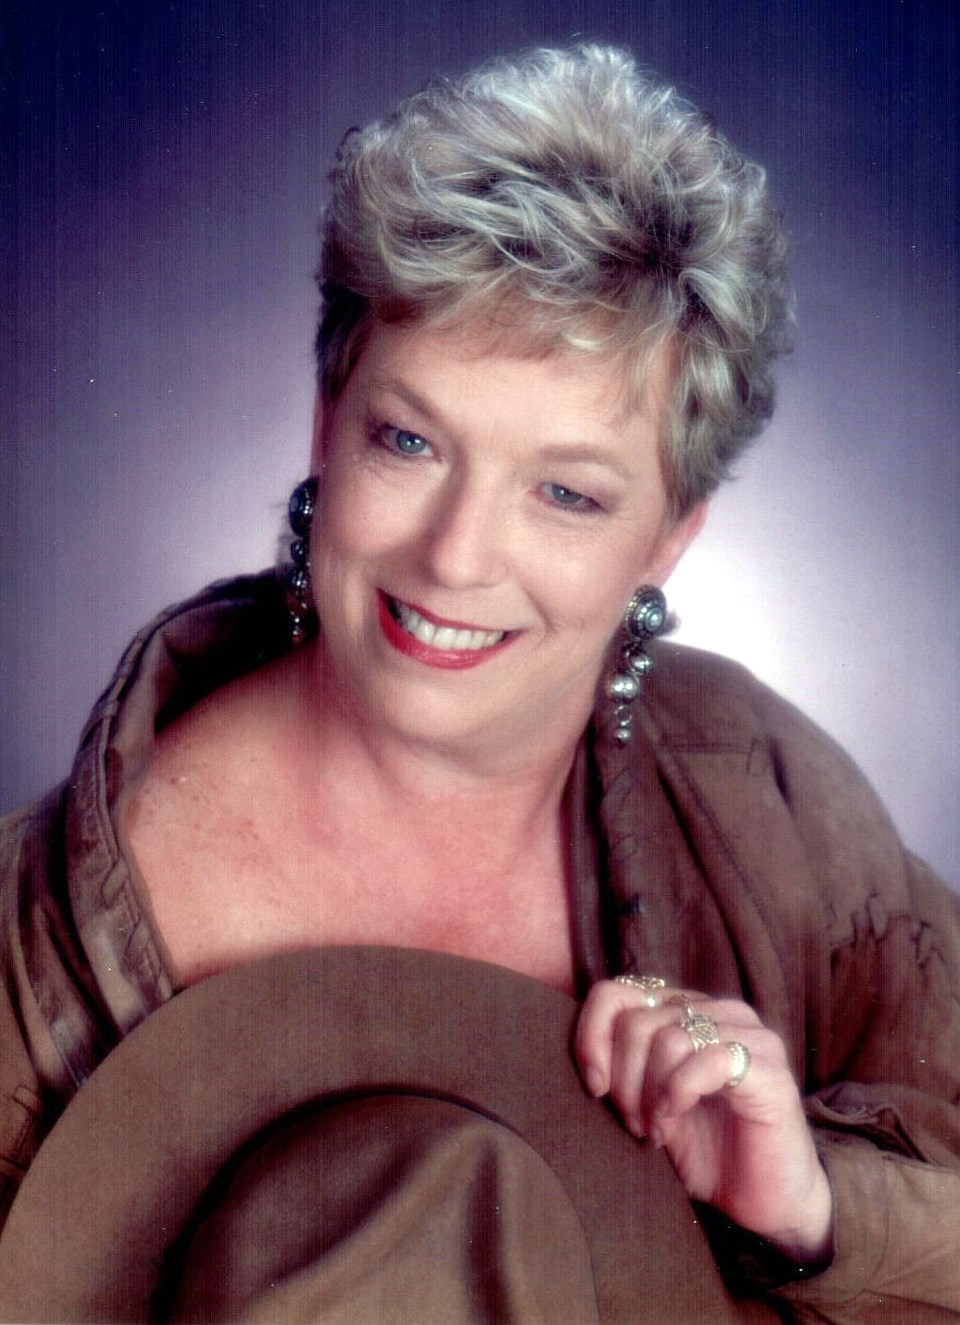 Gail Brooks Obituary - Dallas, TX